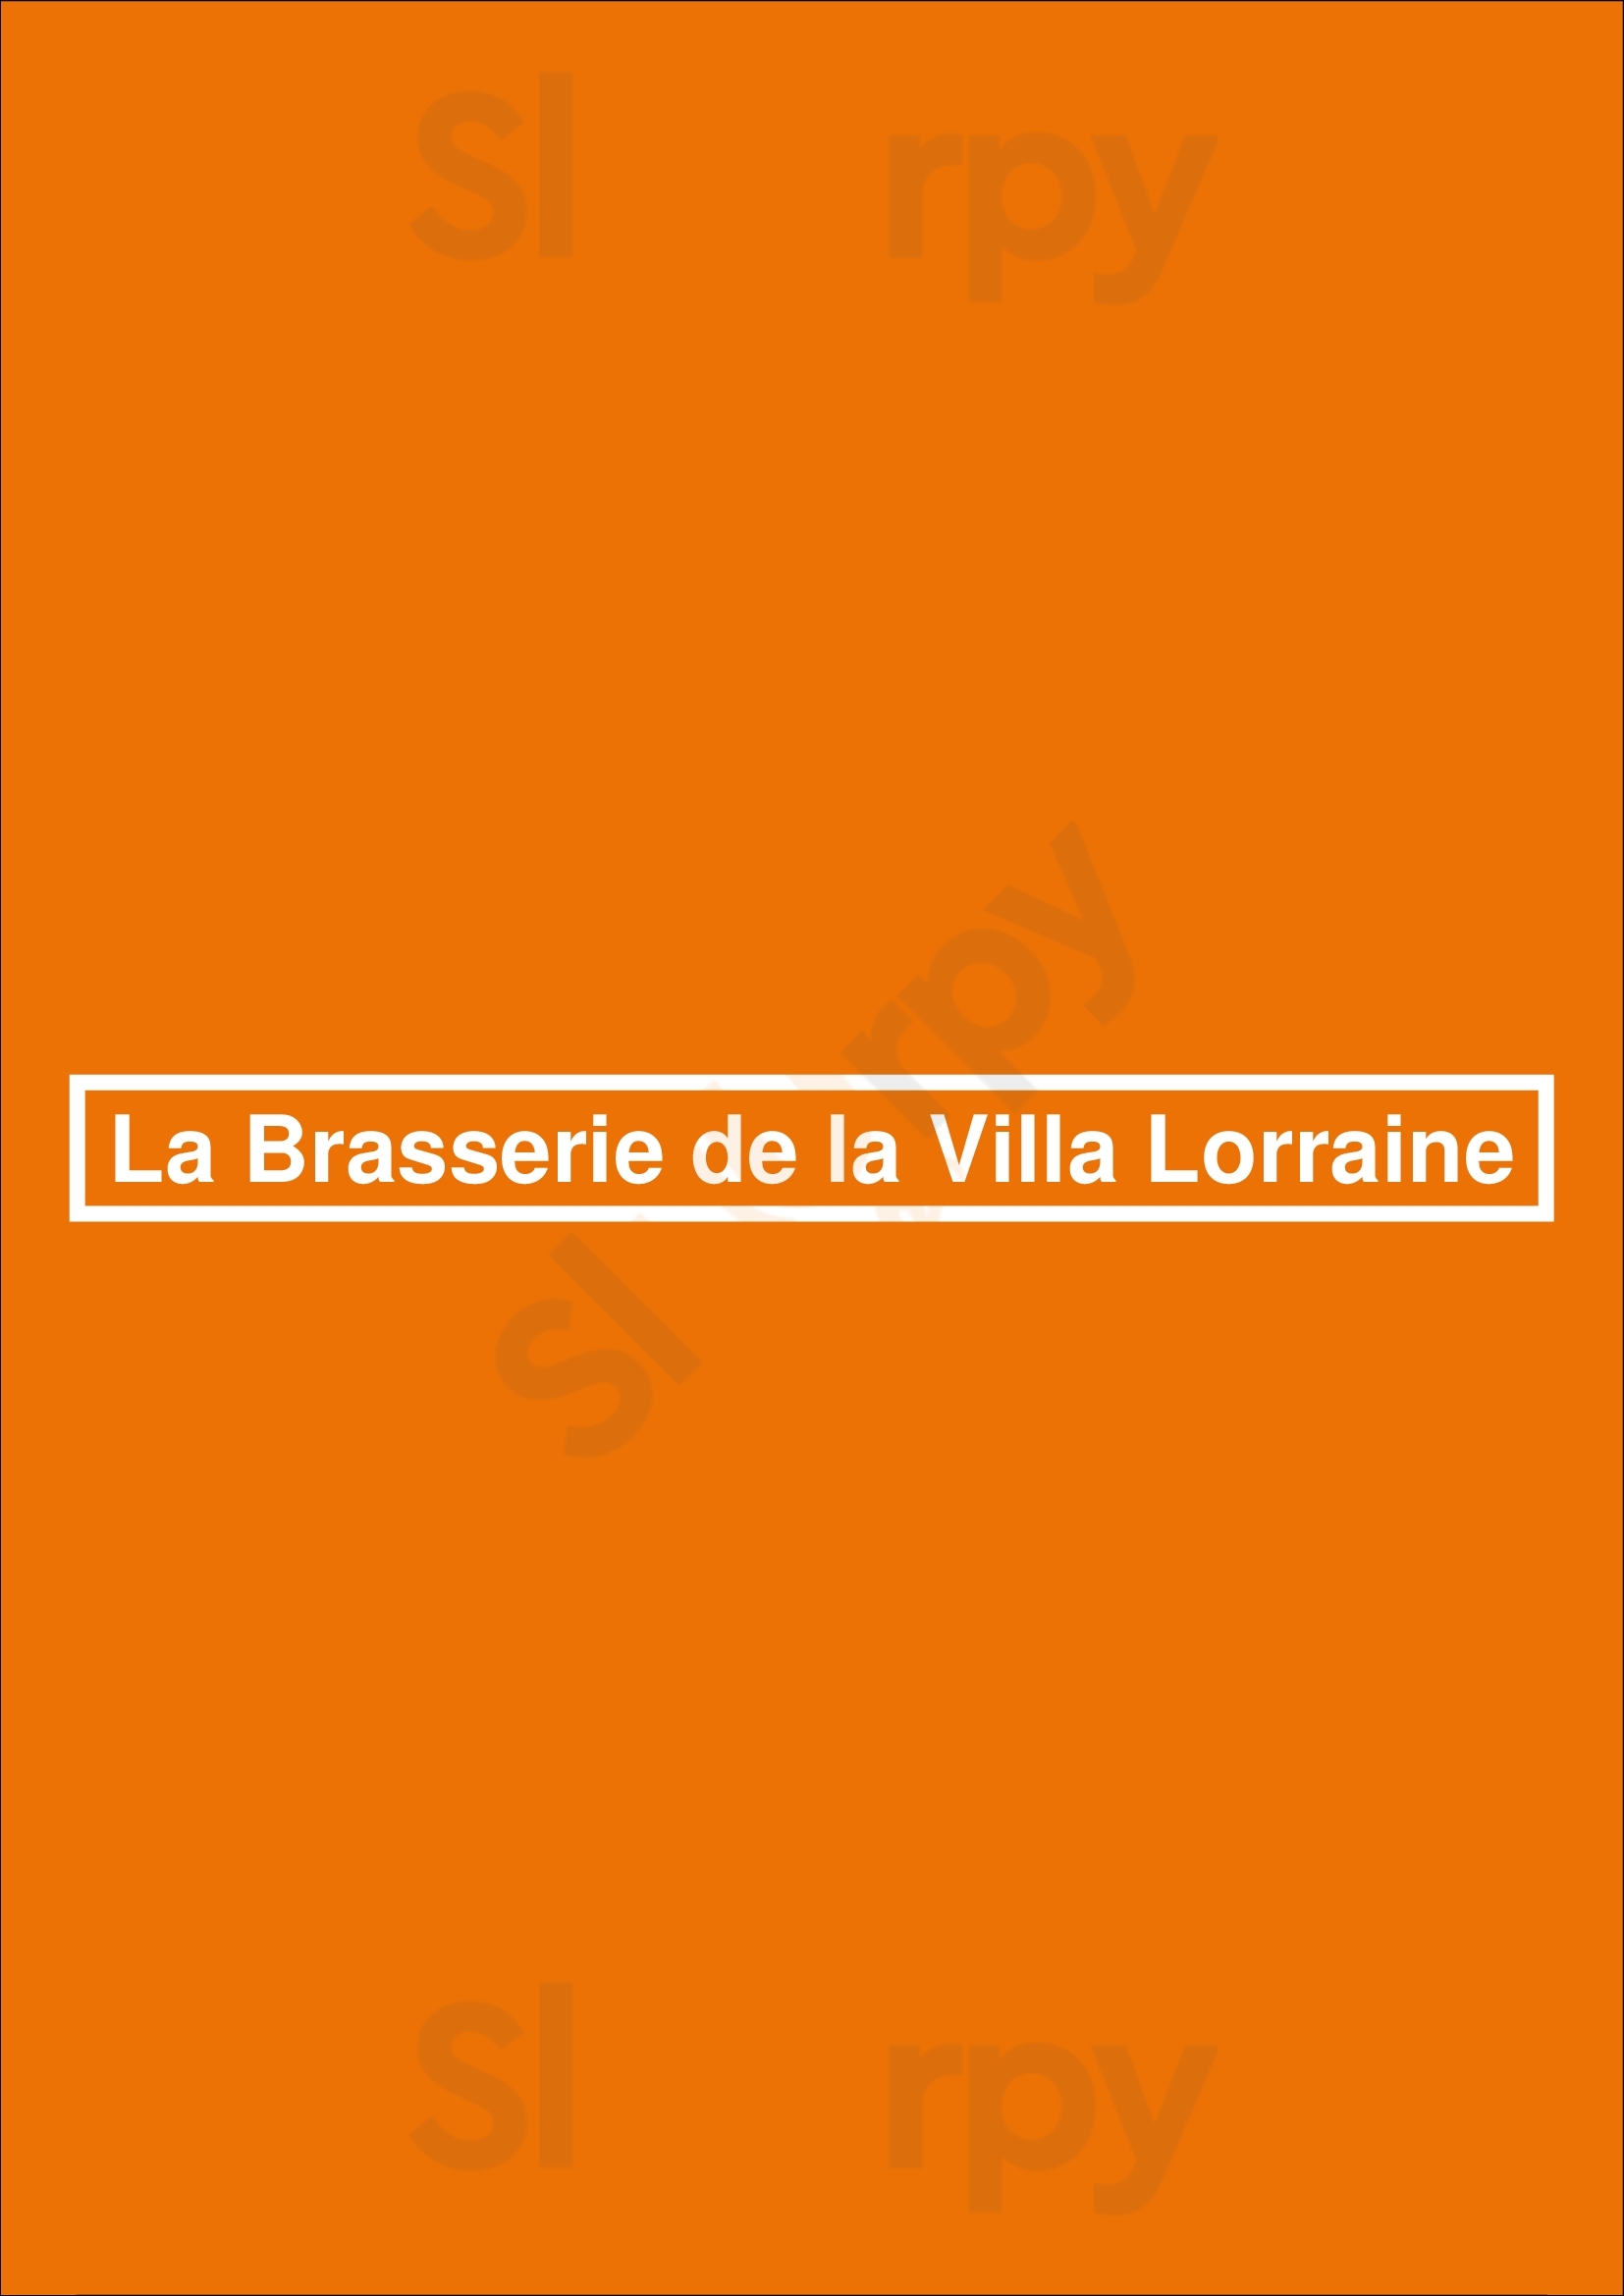 La Brasserie De La Villa Lorraine Bruxelles Menu - 1